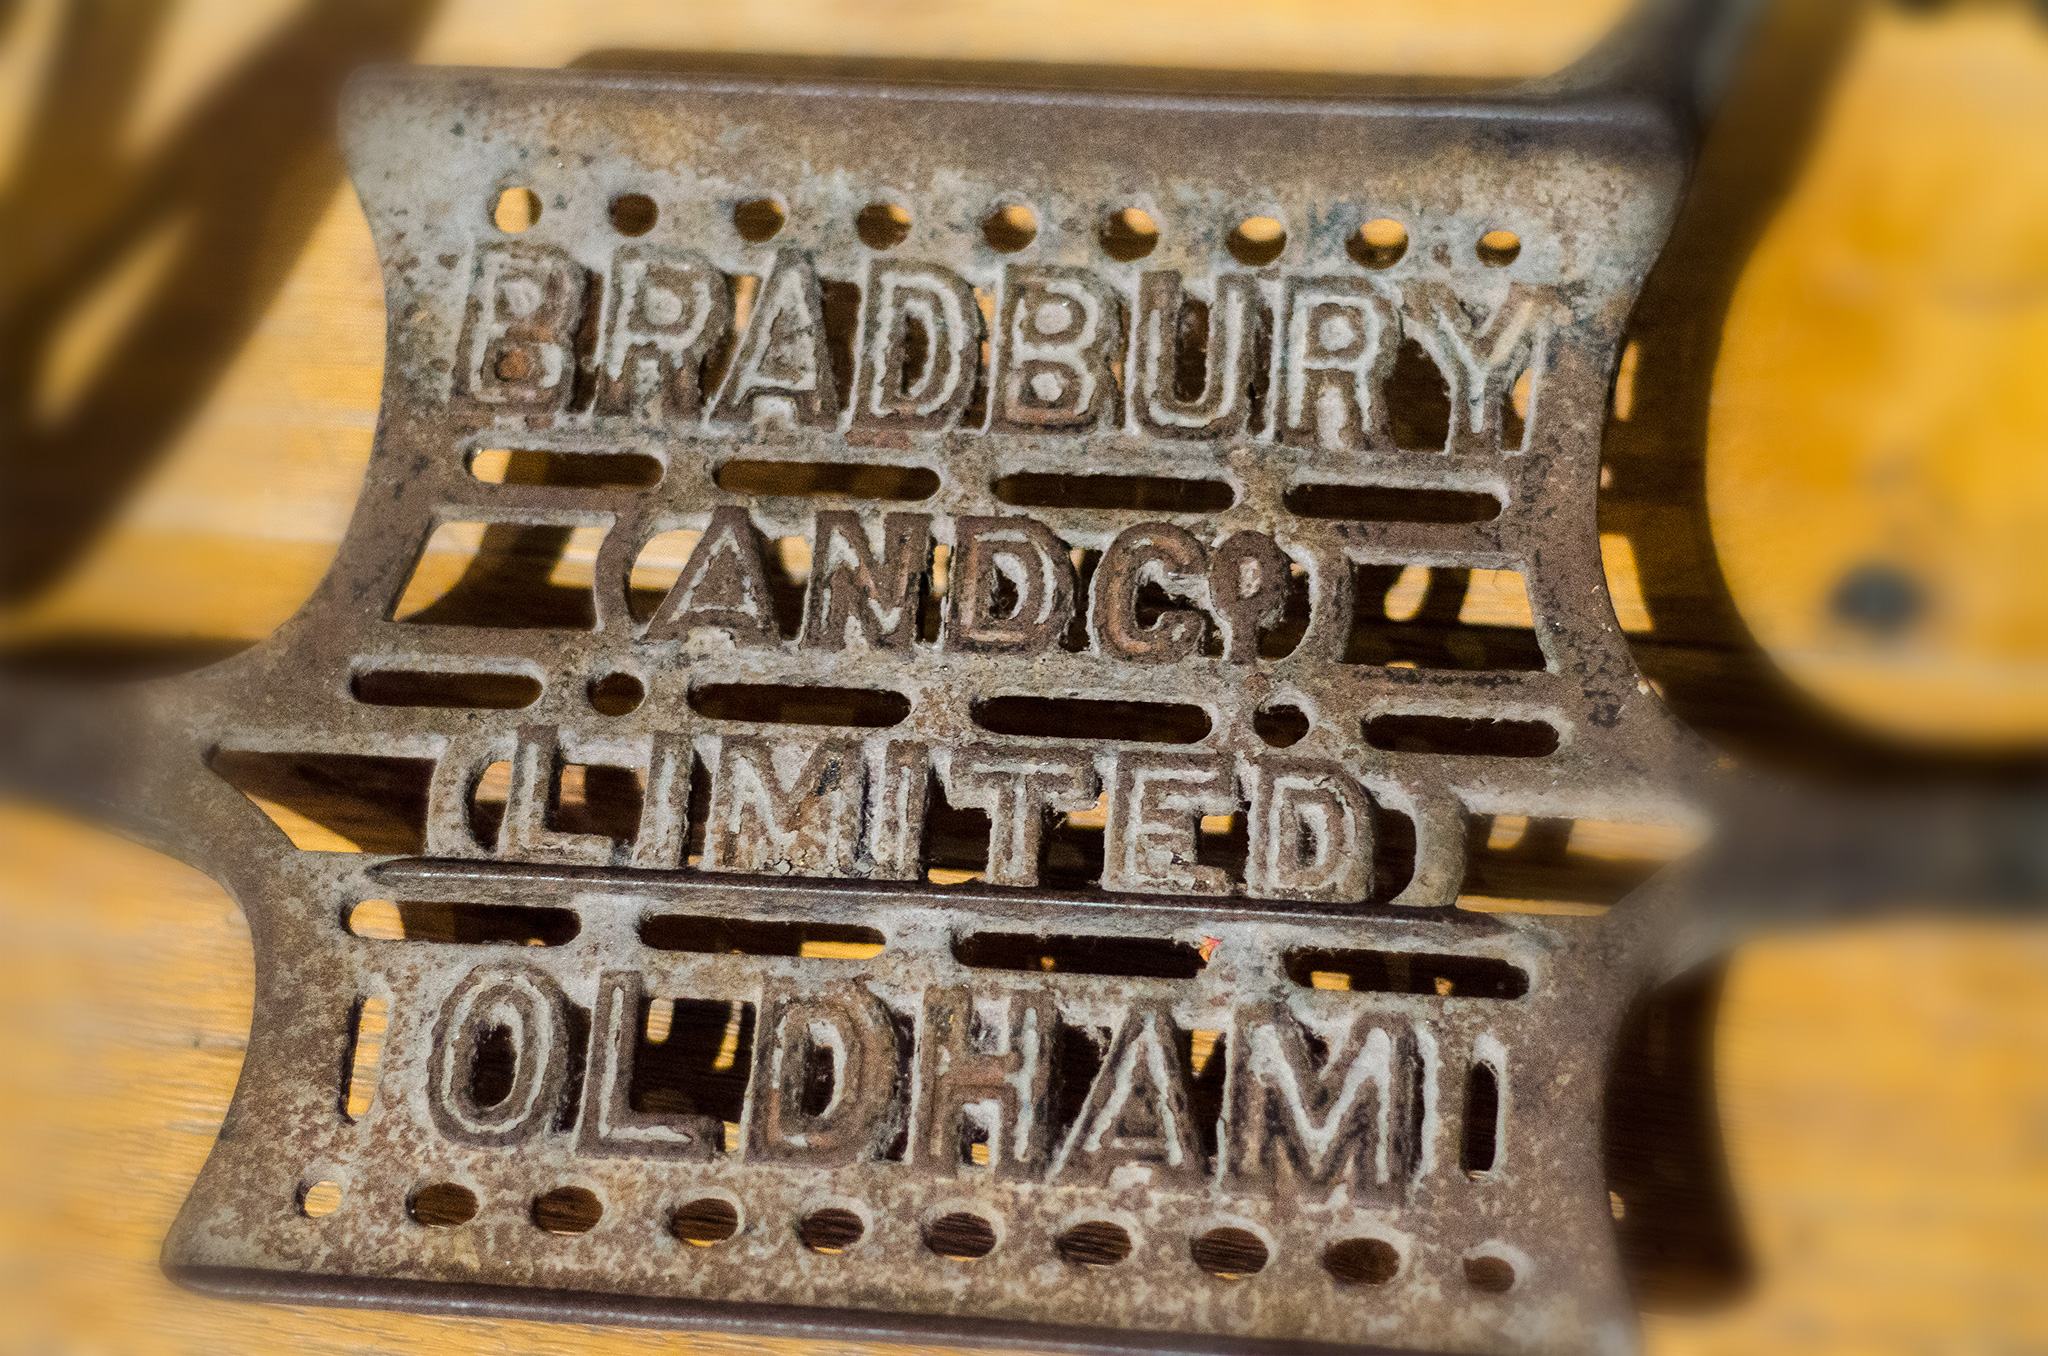 dublin bradbury and company oldham